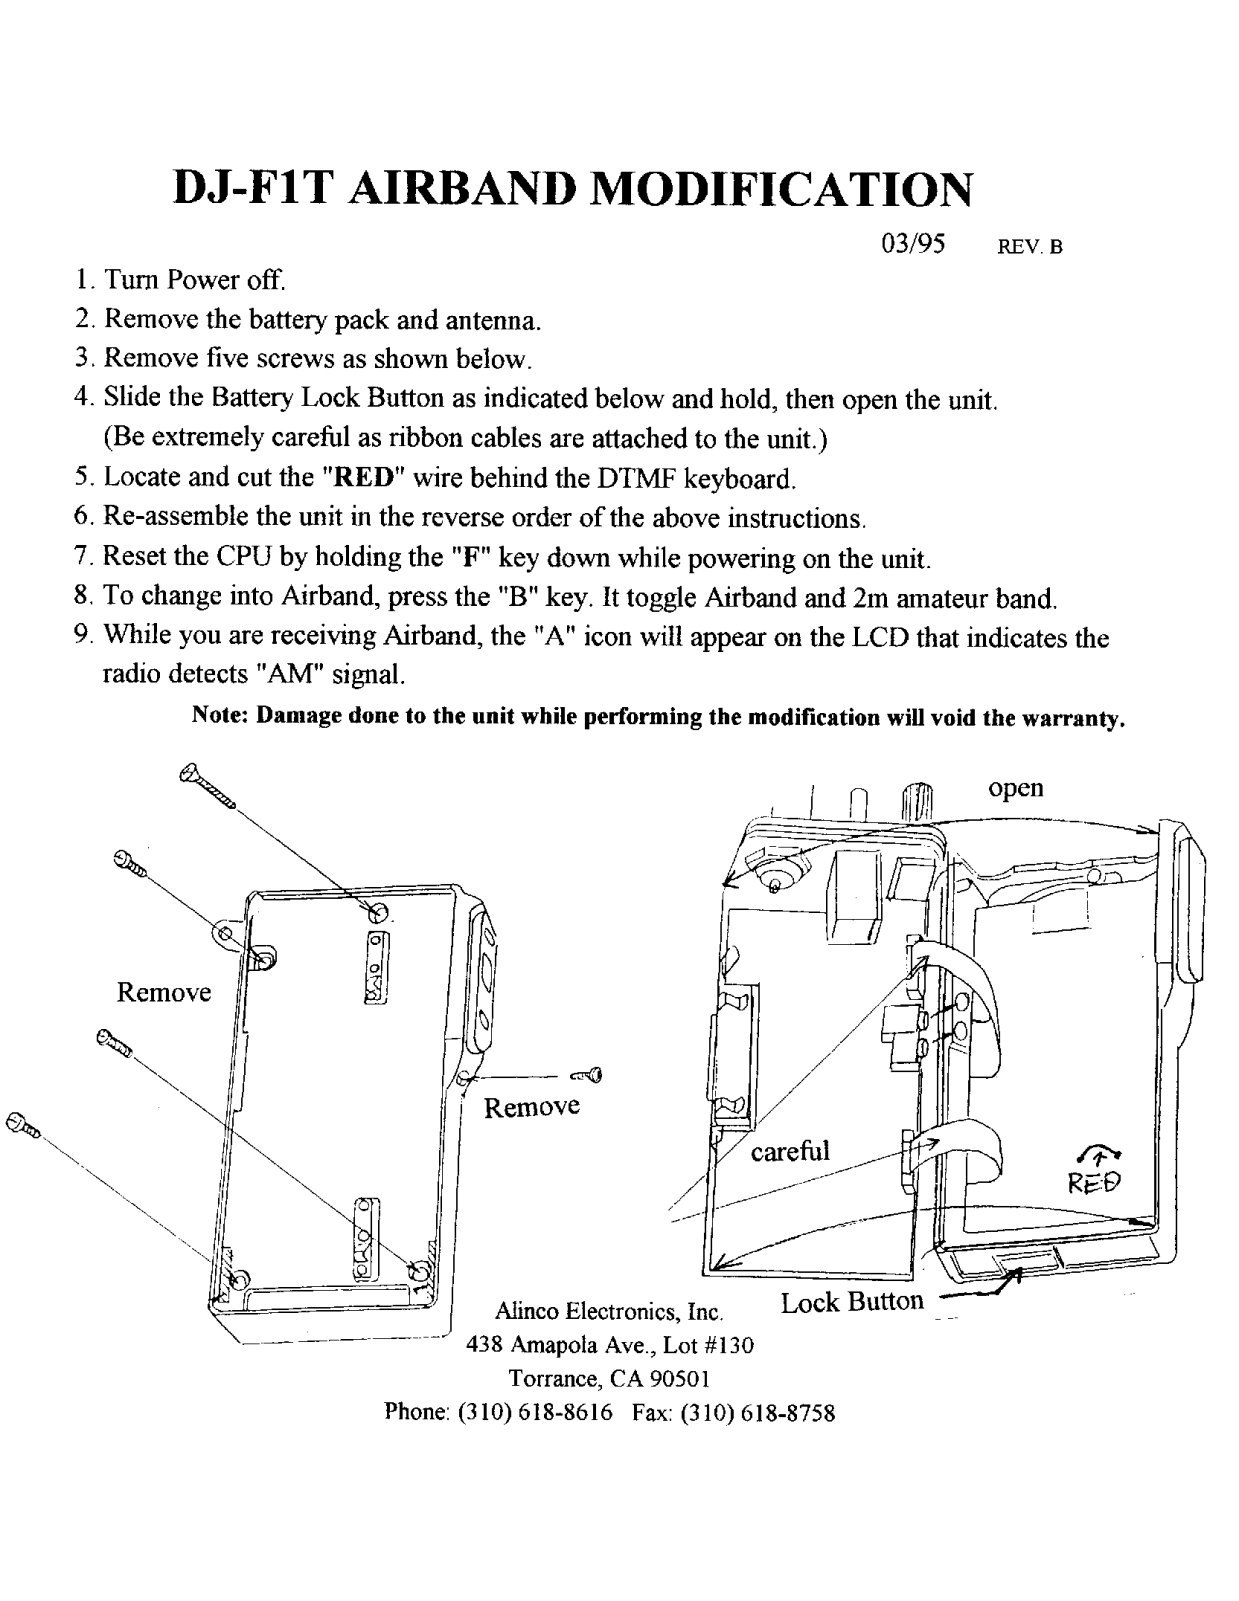 Alinco djf1T User Manual